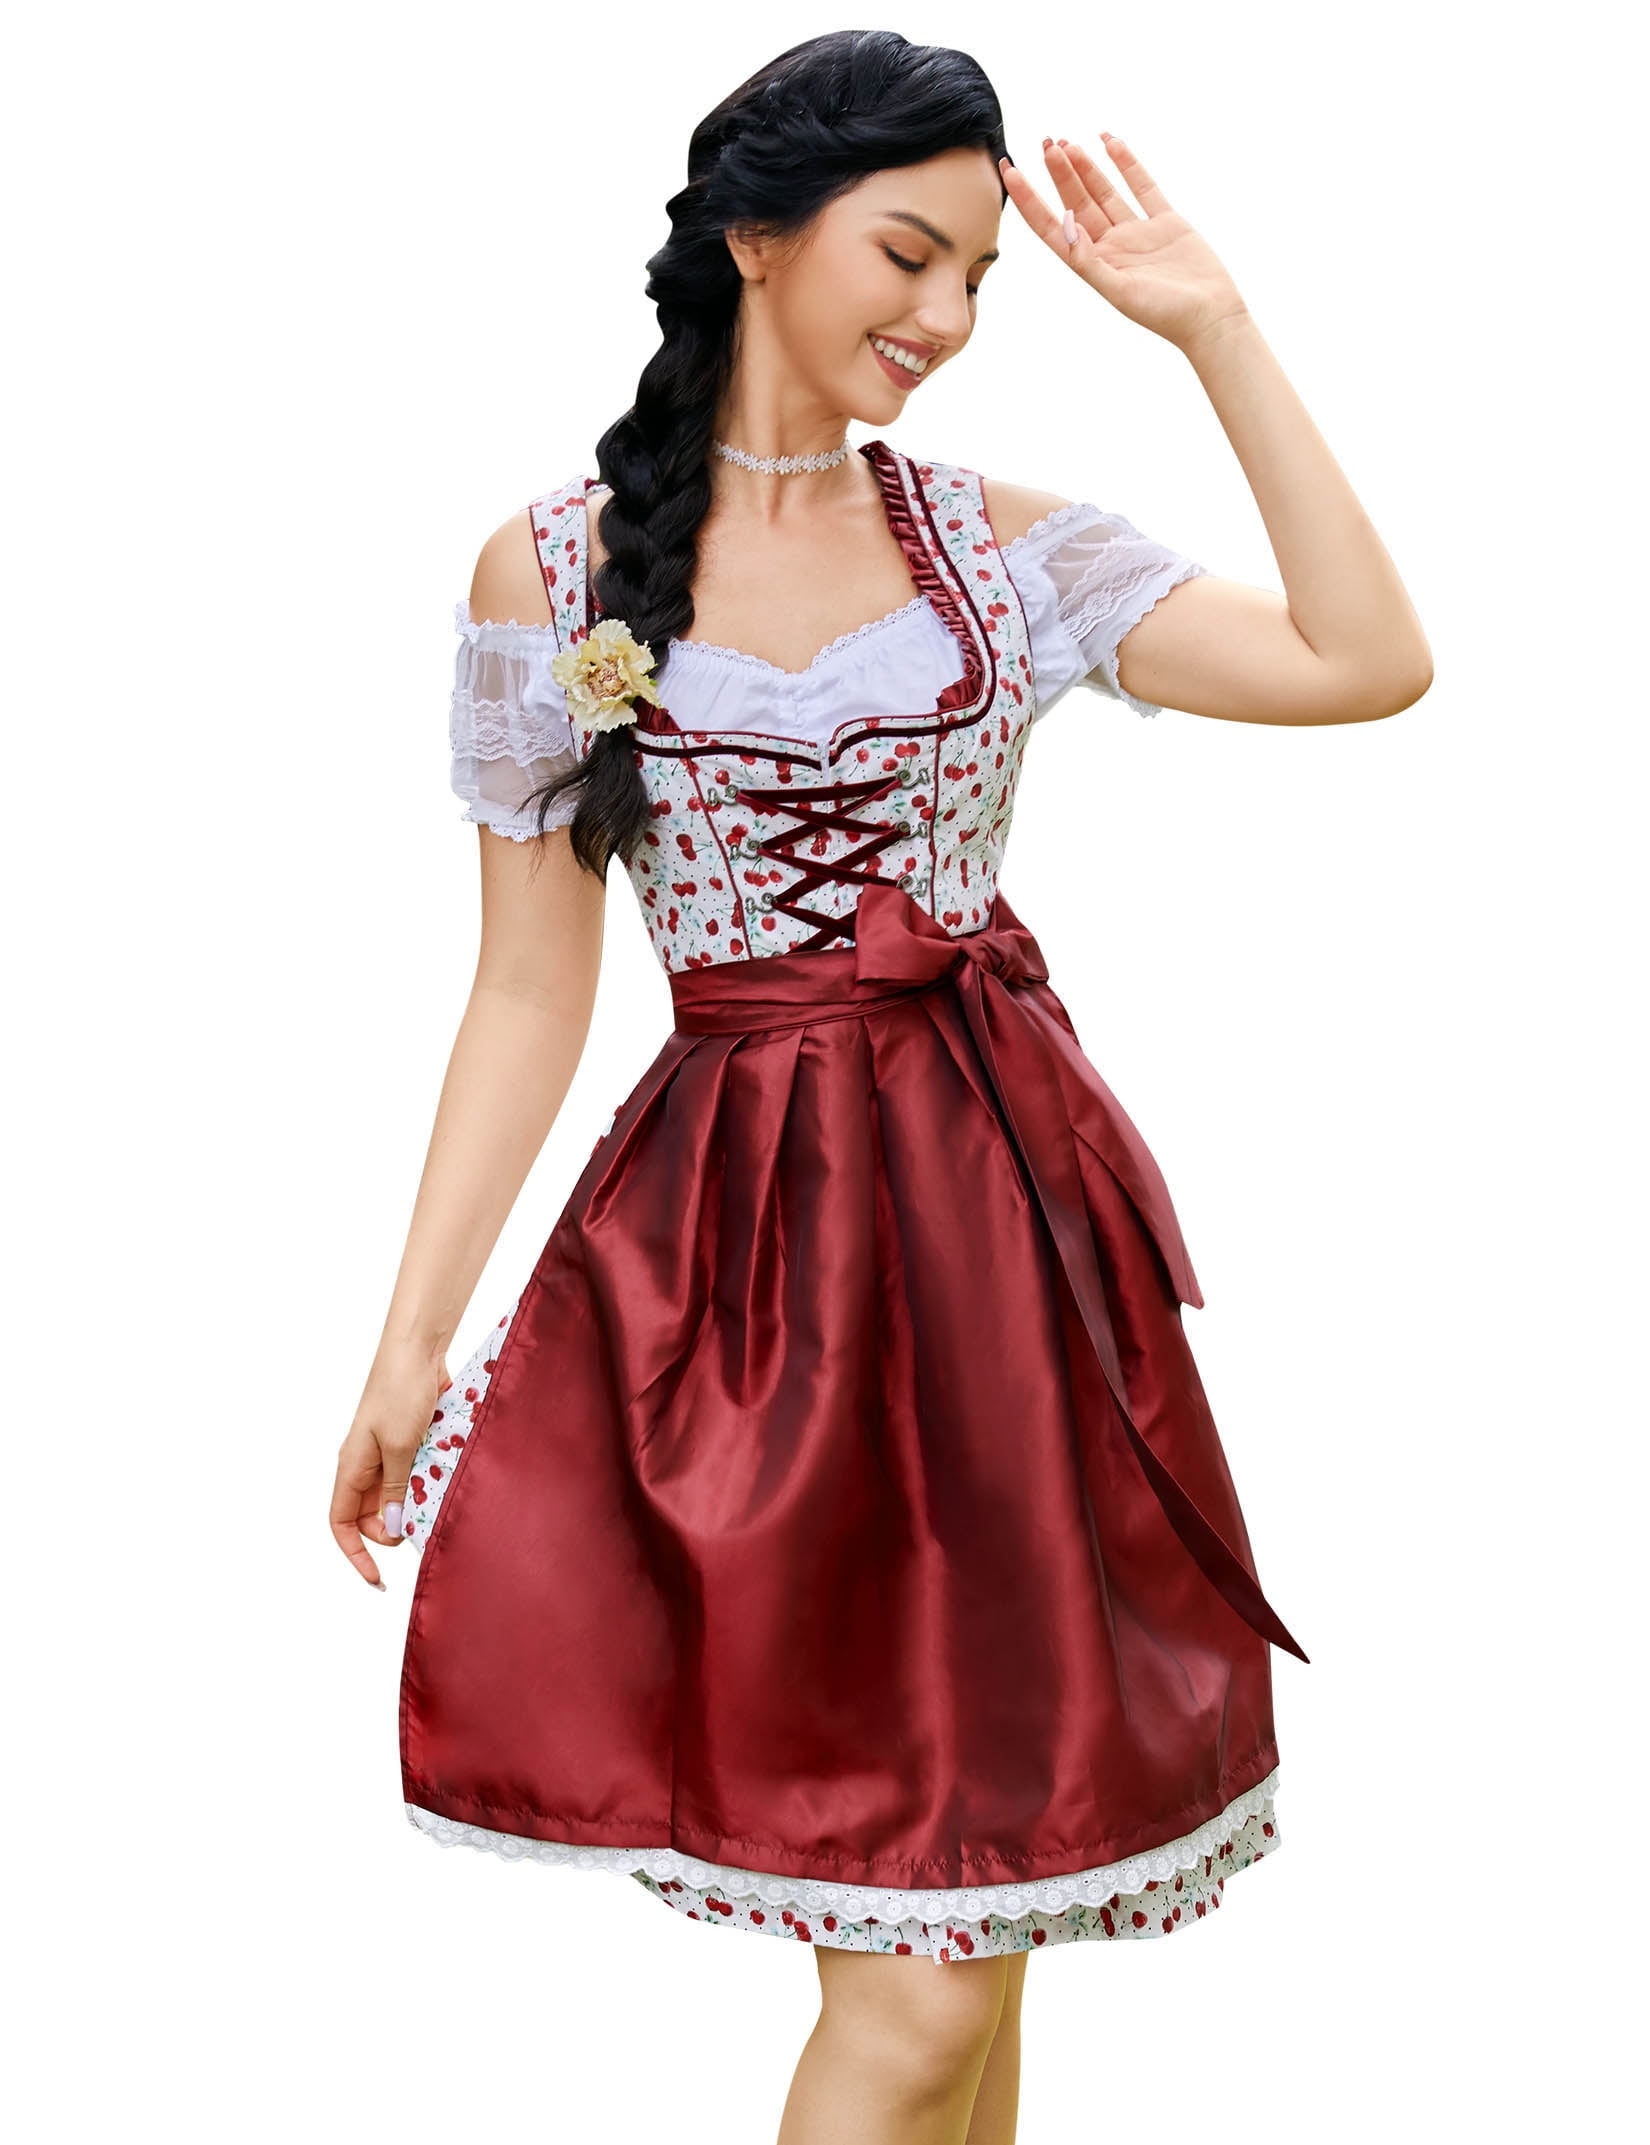 dress of germany